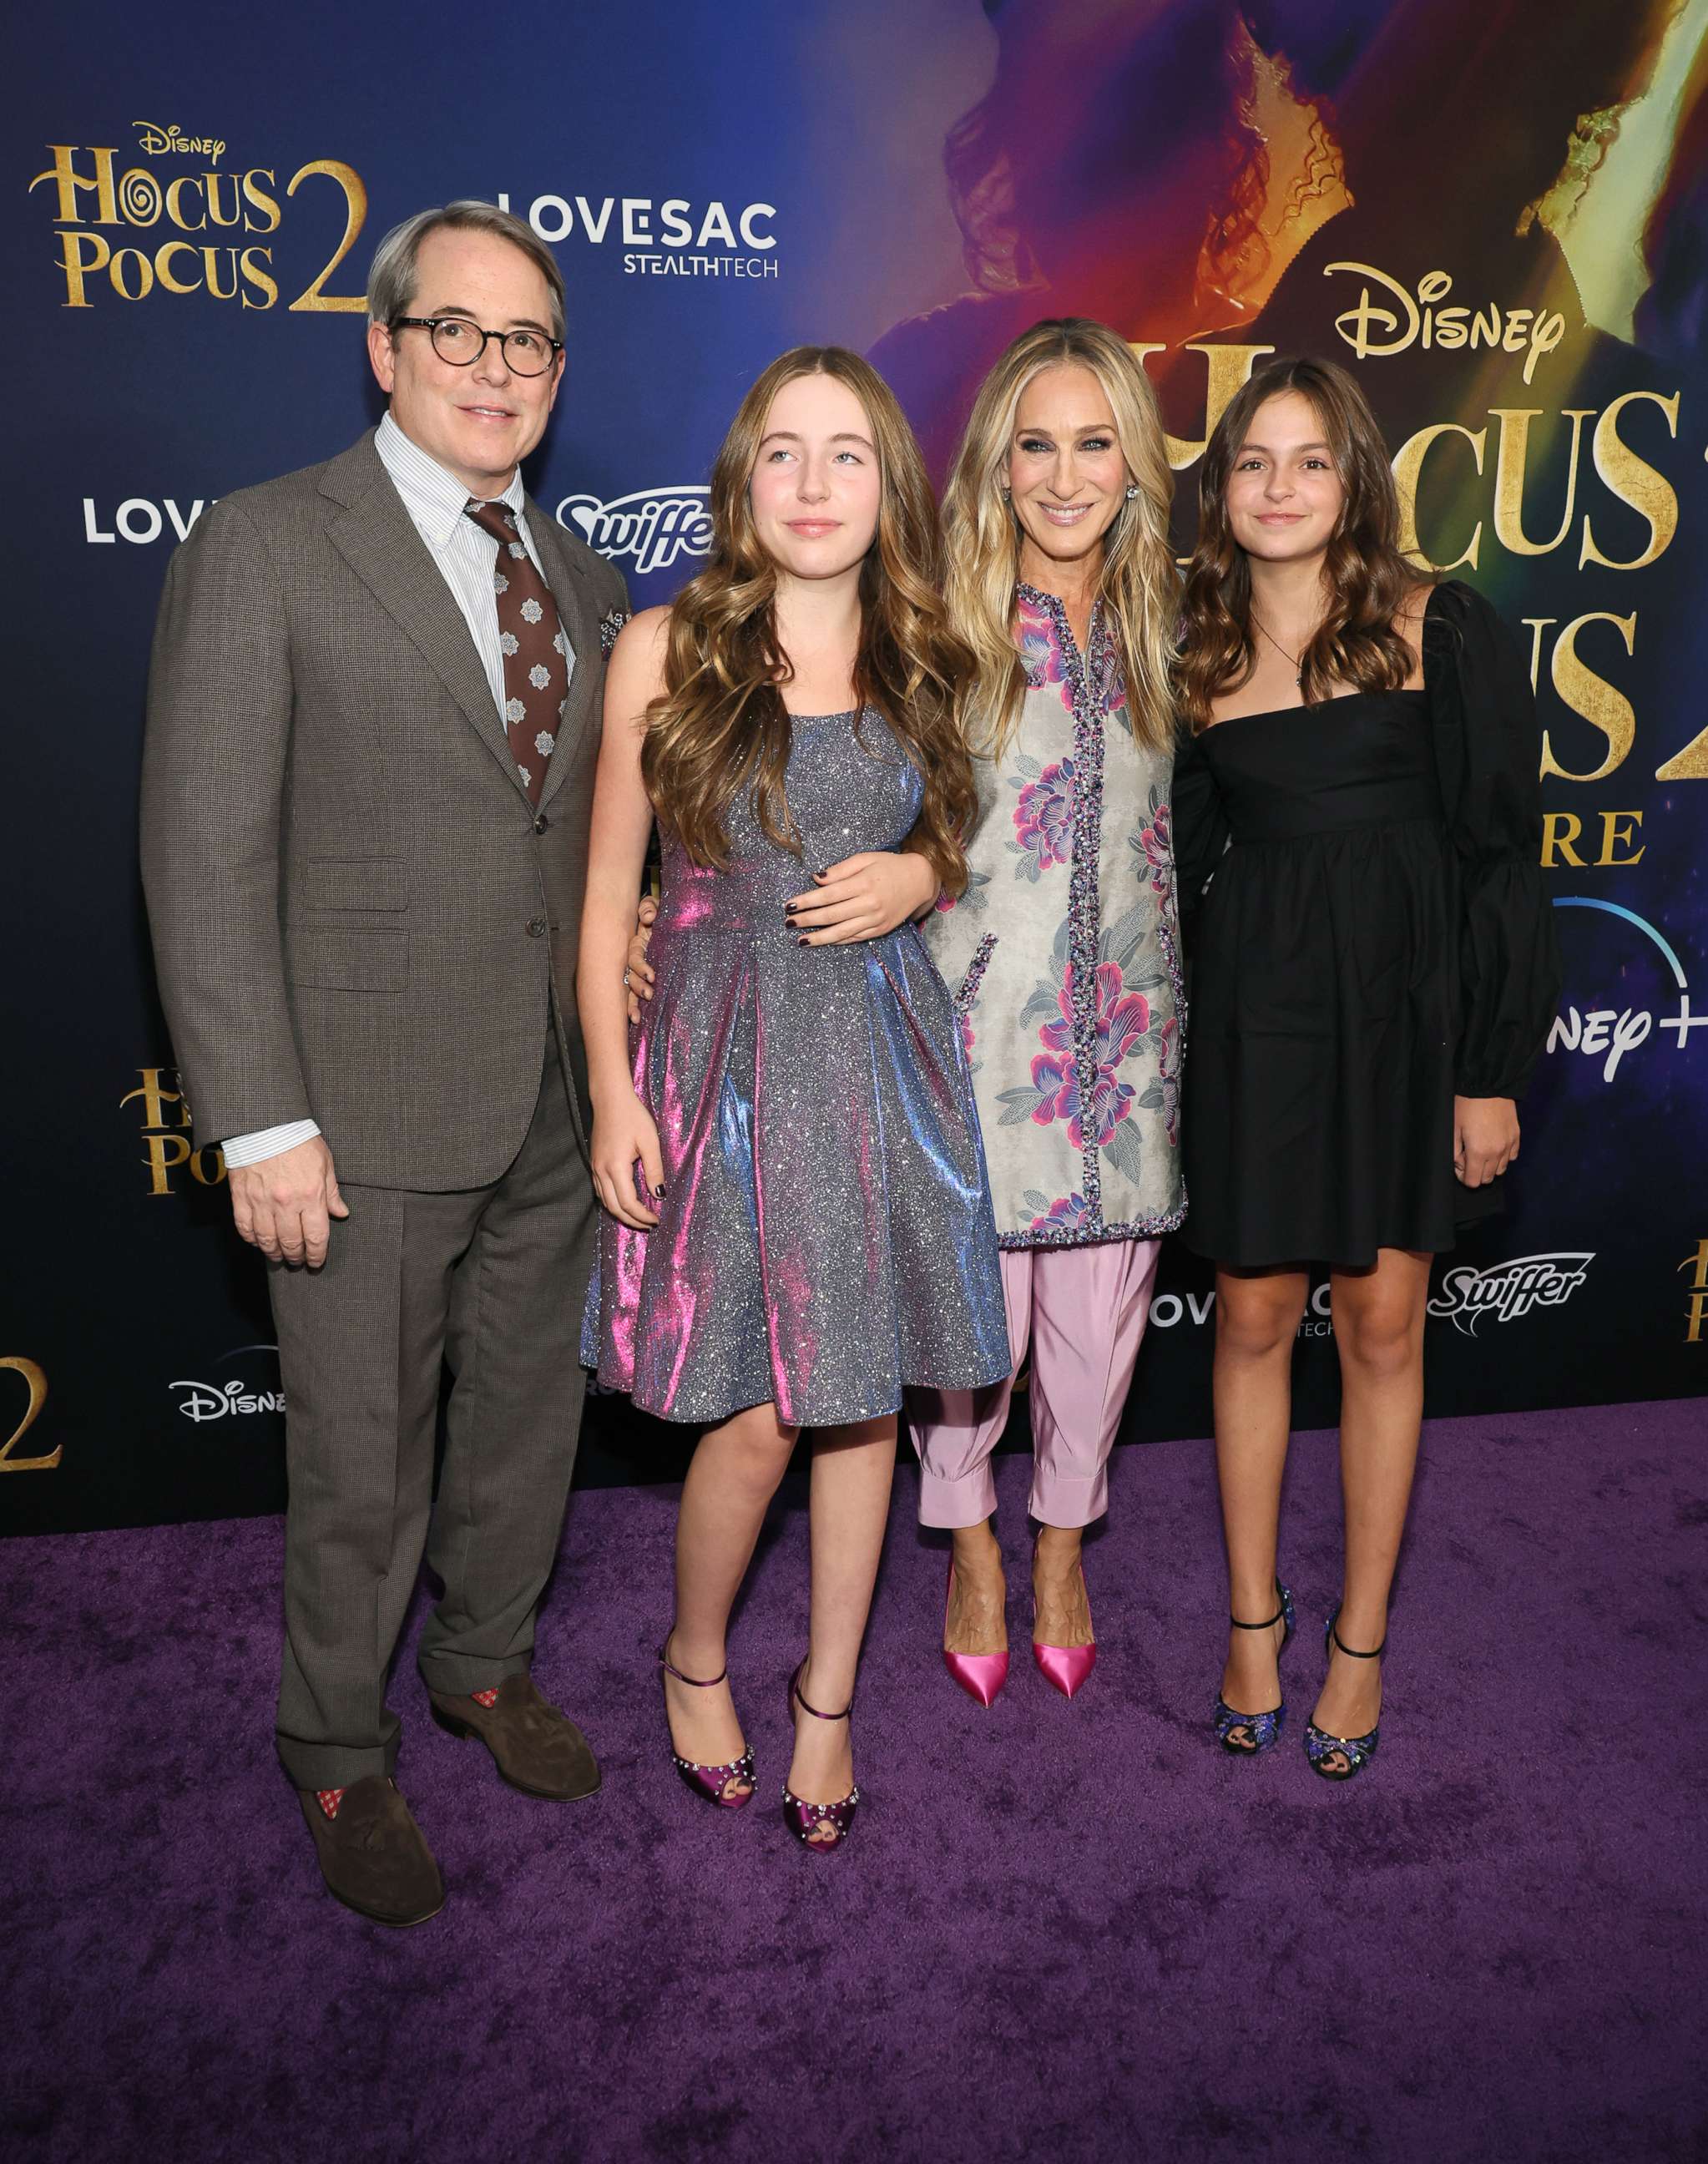 Sarah Jessica Parker brings twin daughters to 'Hocus Pocus 2' premiere